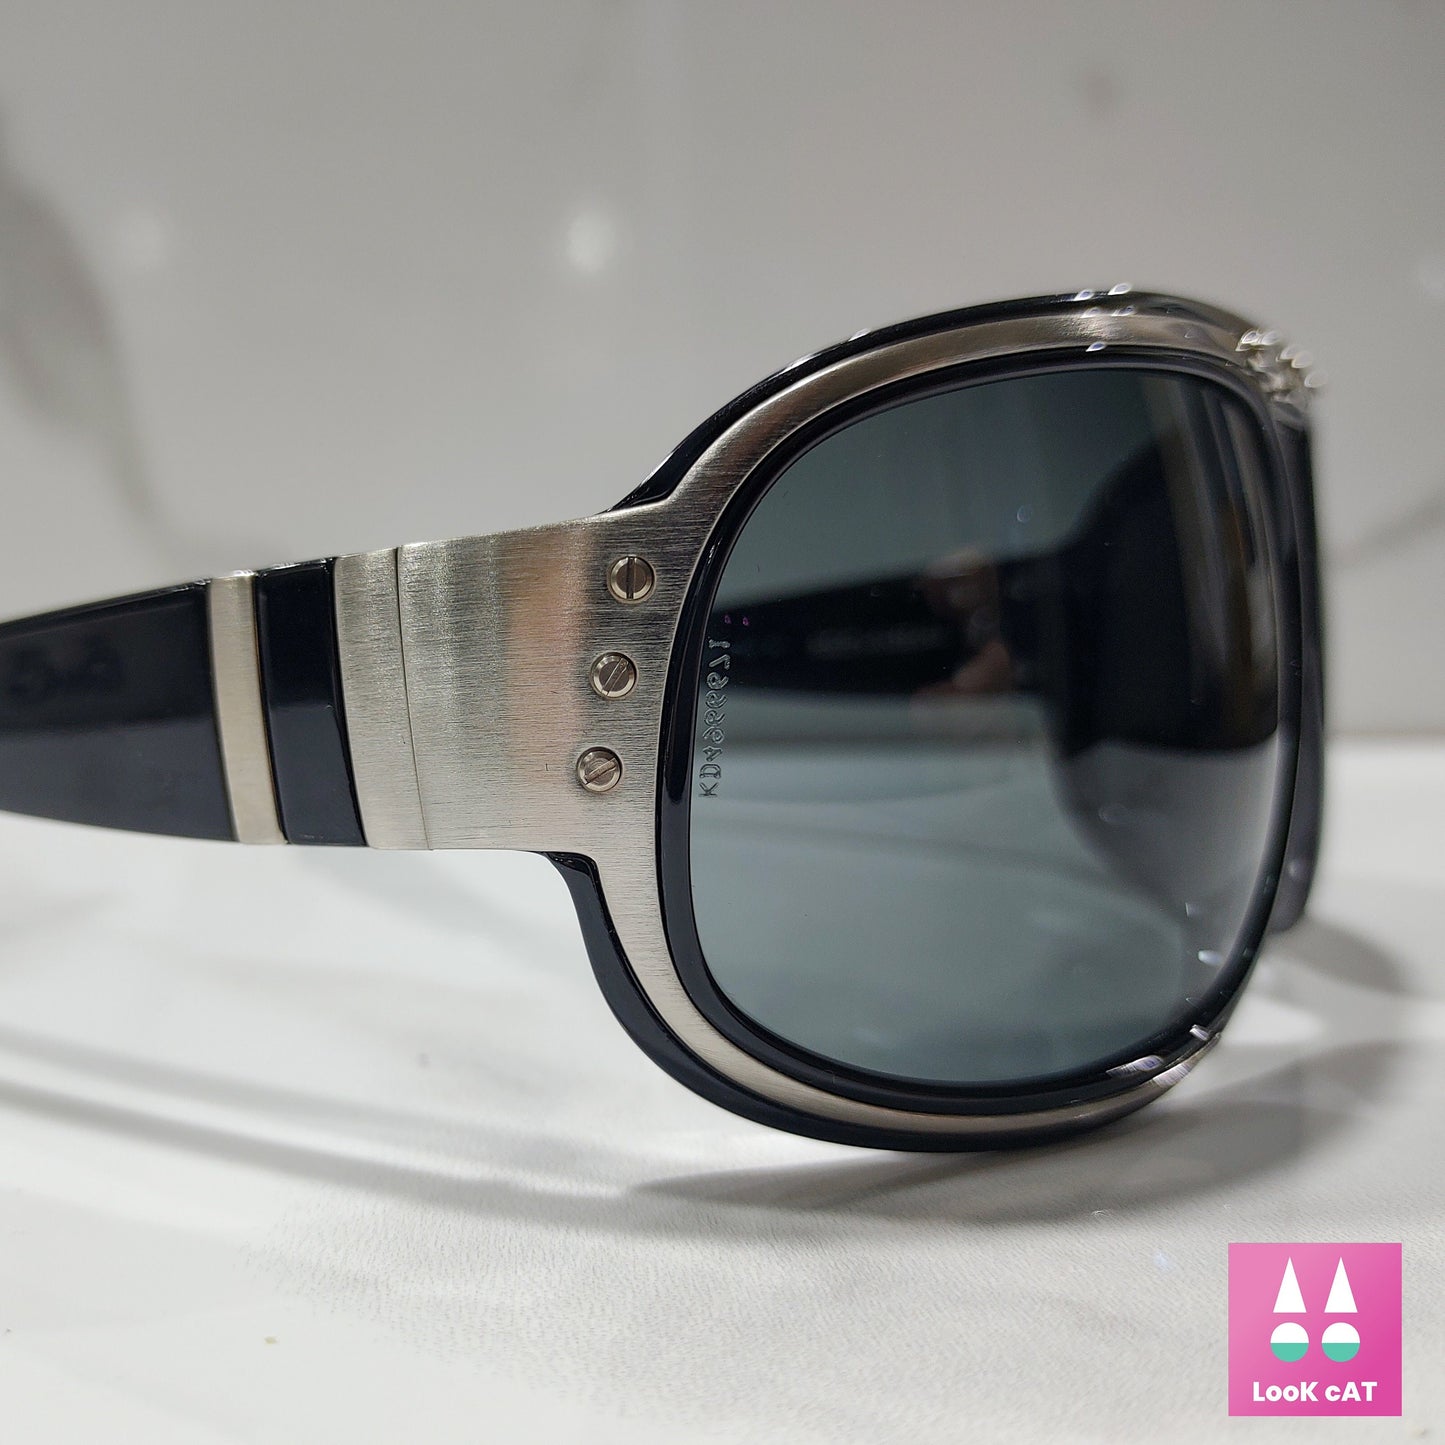 Dolce e Gabbana DG 6045 Y2K occhiali da sole vintage occhiali gafas avvolgenti scudo